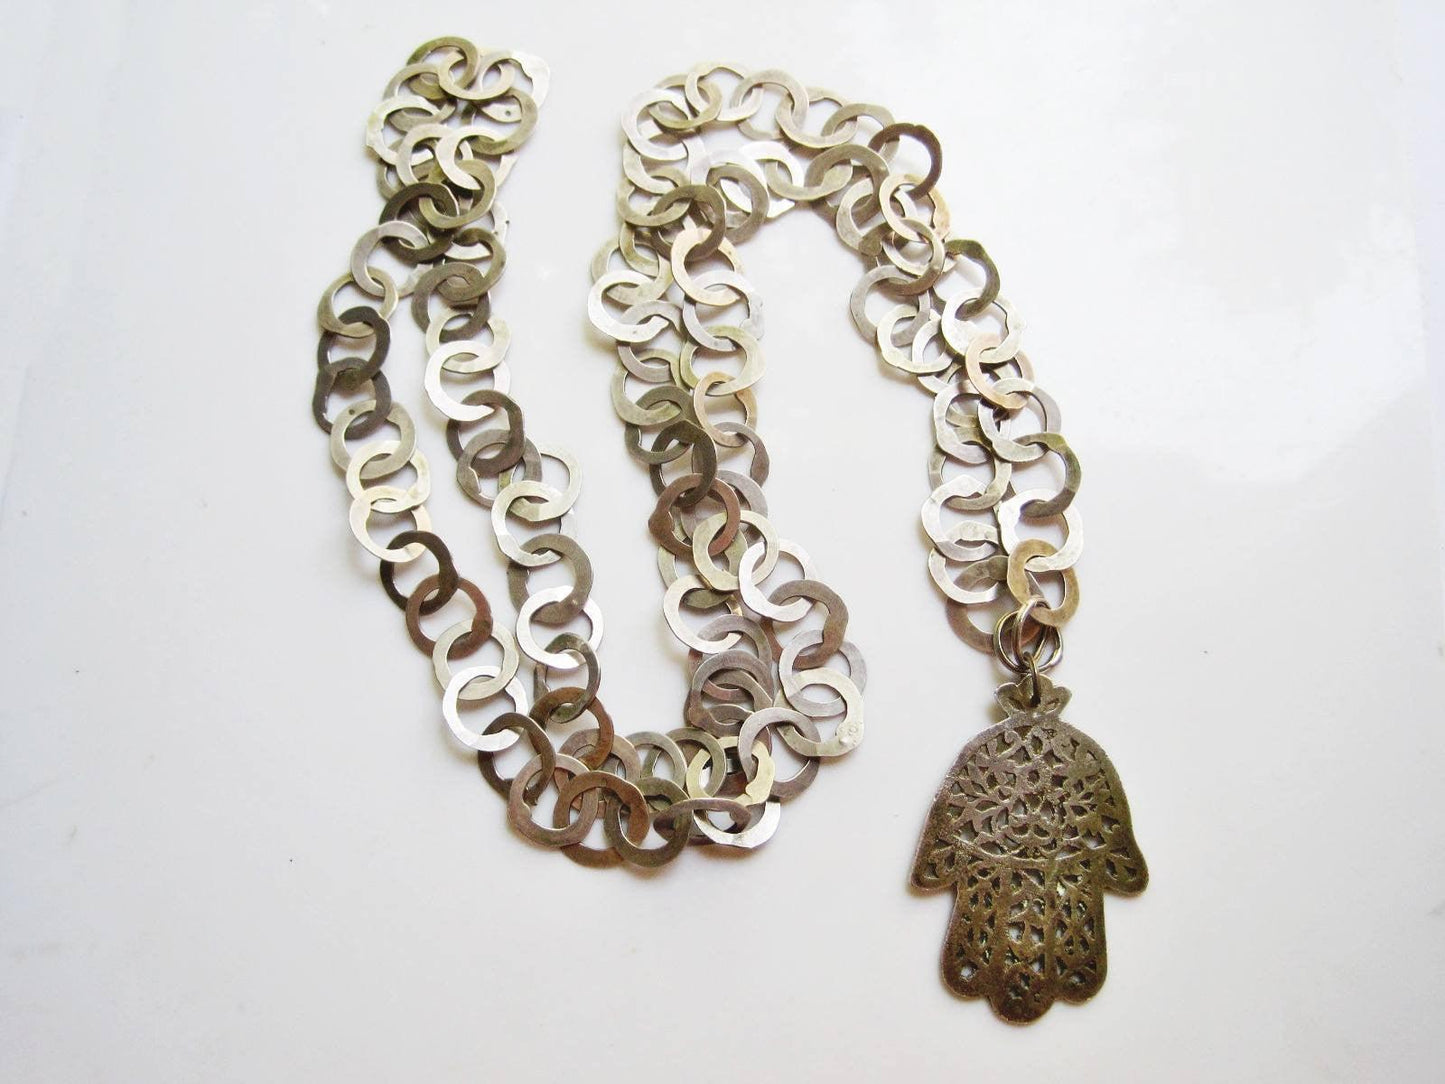 berber silver necklace